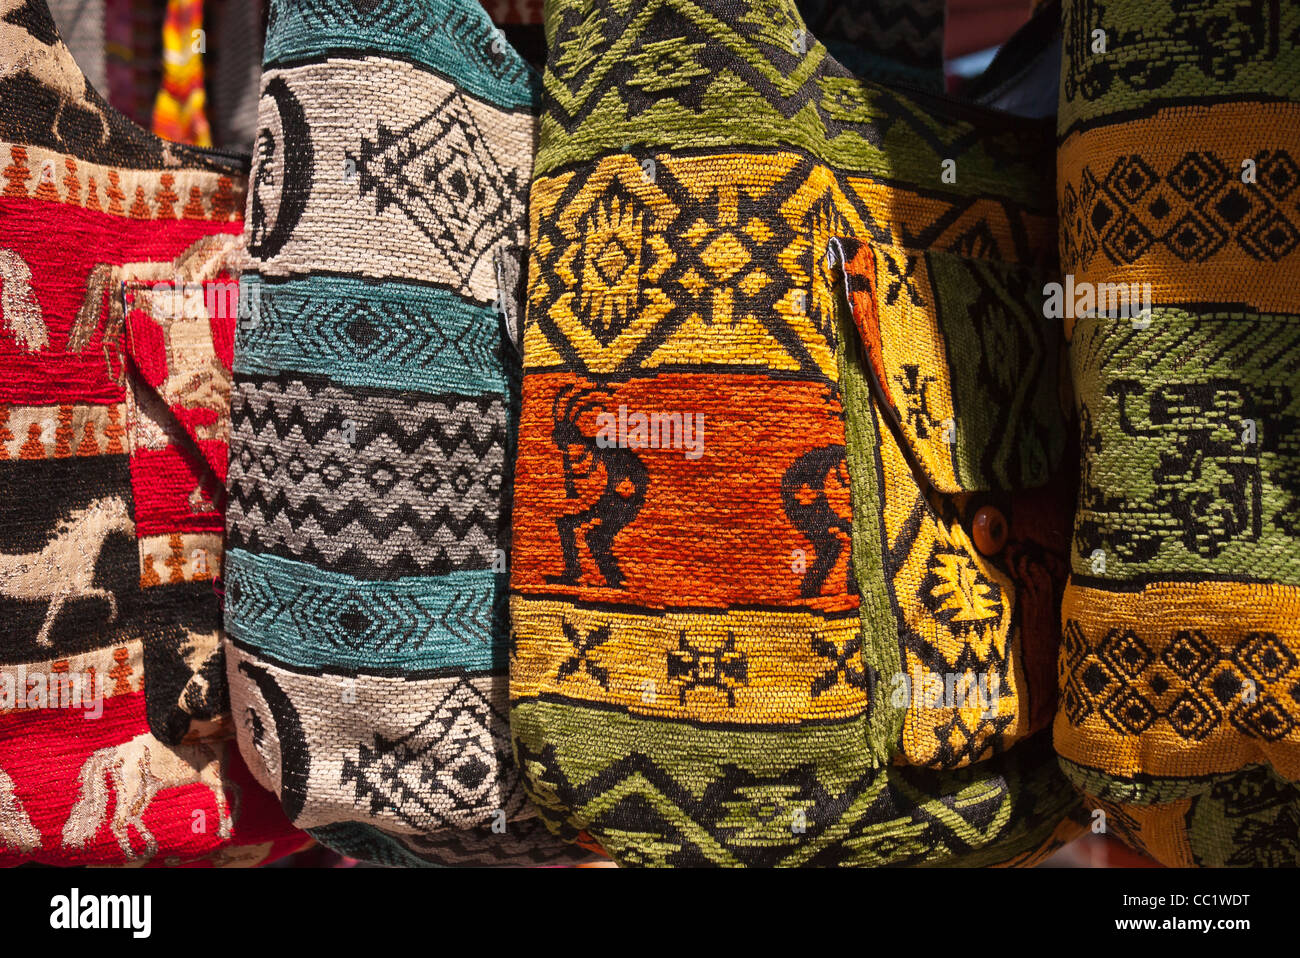 Woven handbags hang for sale in the sunshine of the outdoor market in Otavalo, Ecuador. Stock Photo